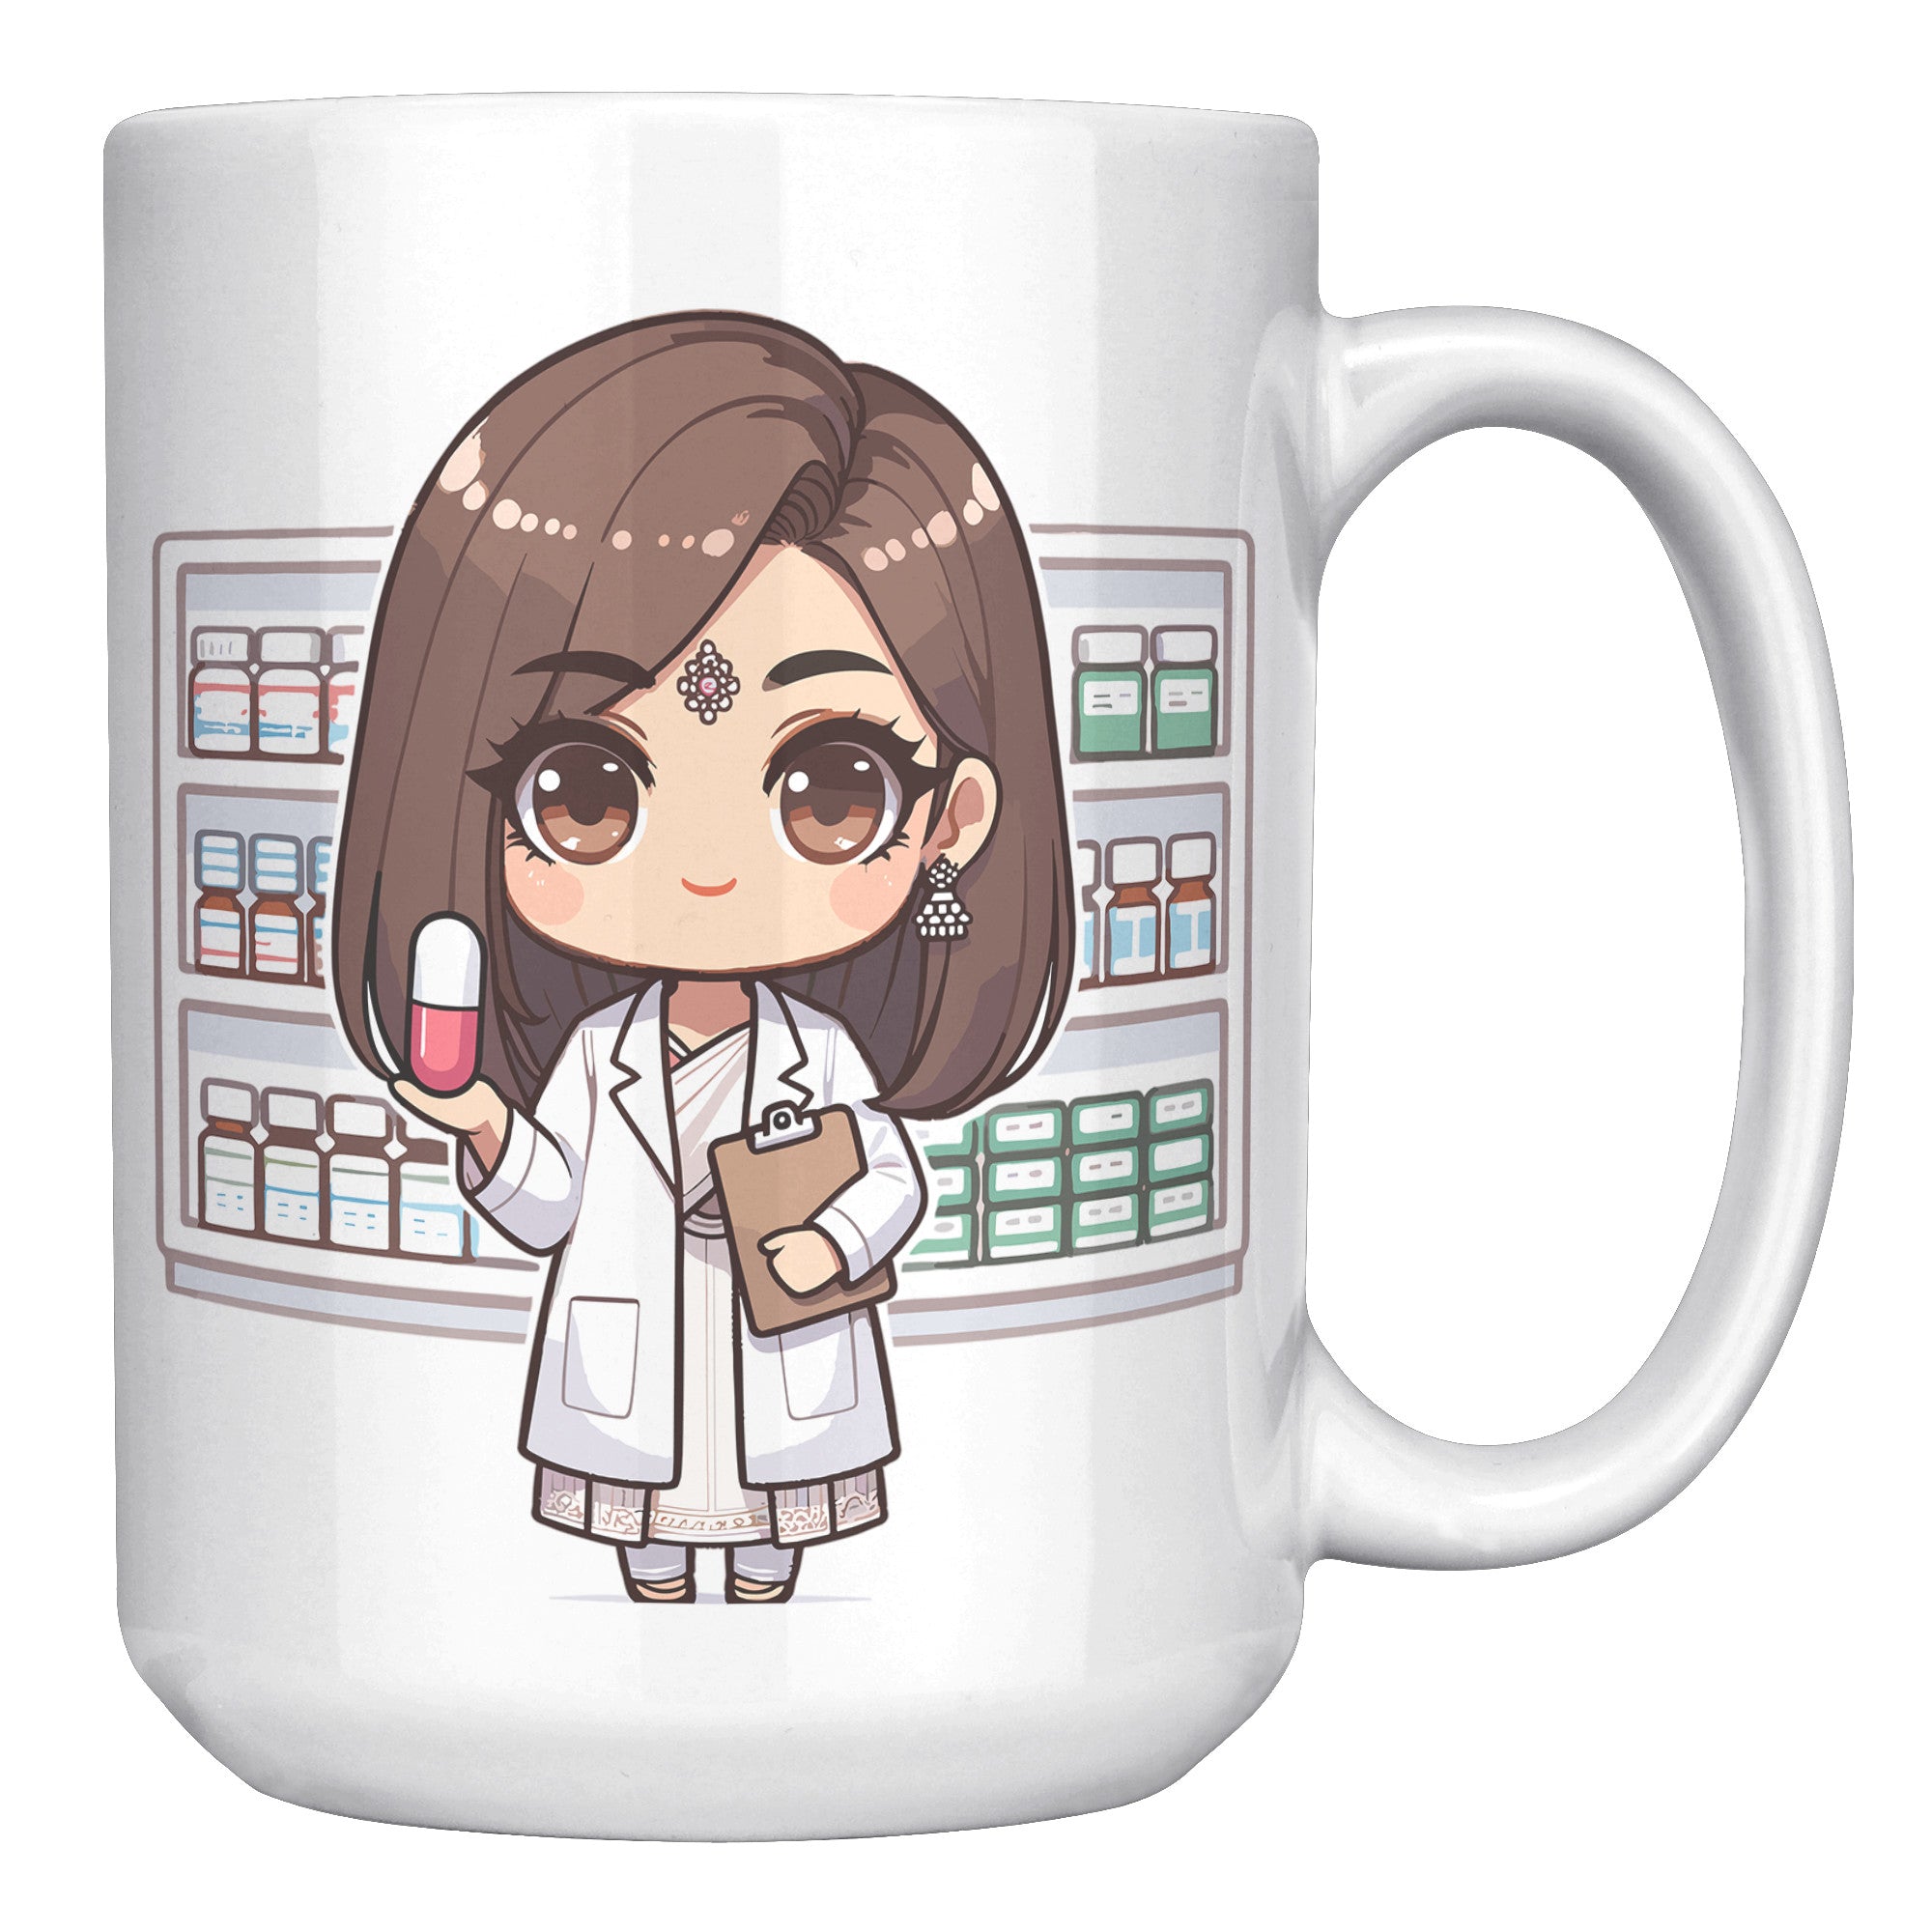 15oz Custom Pharmacist Character Coffee Mug - Cute Pharmacy Cartoon Cup - Perfect Gift for Pharmacists & Pharmacy Techs - Fun Prescription for Your Coffee! - A1